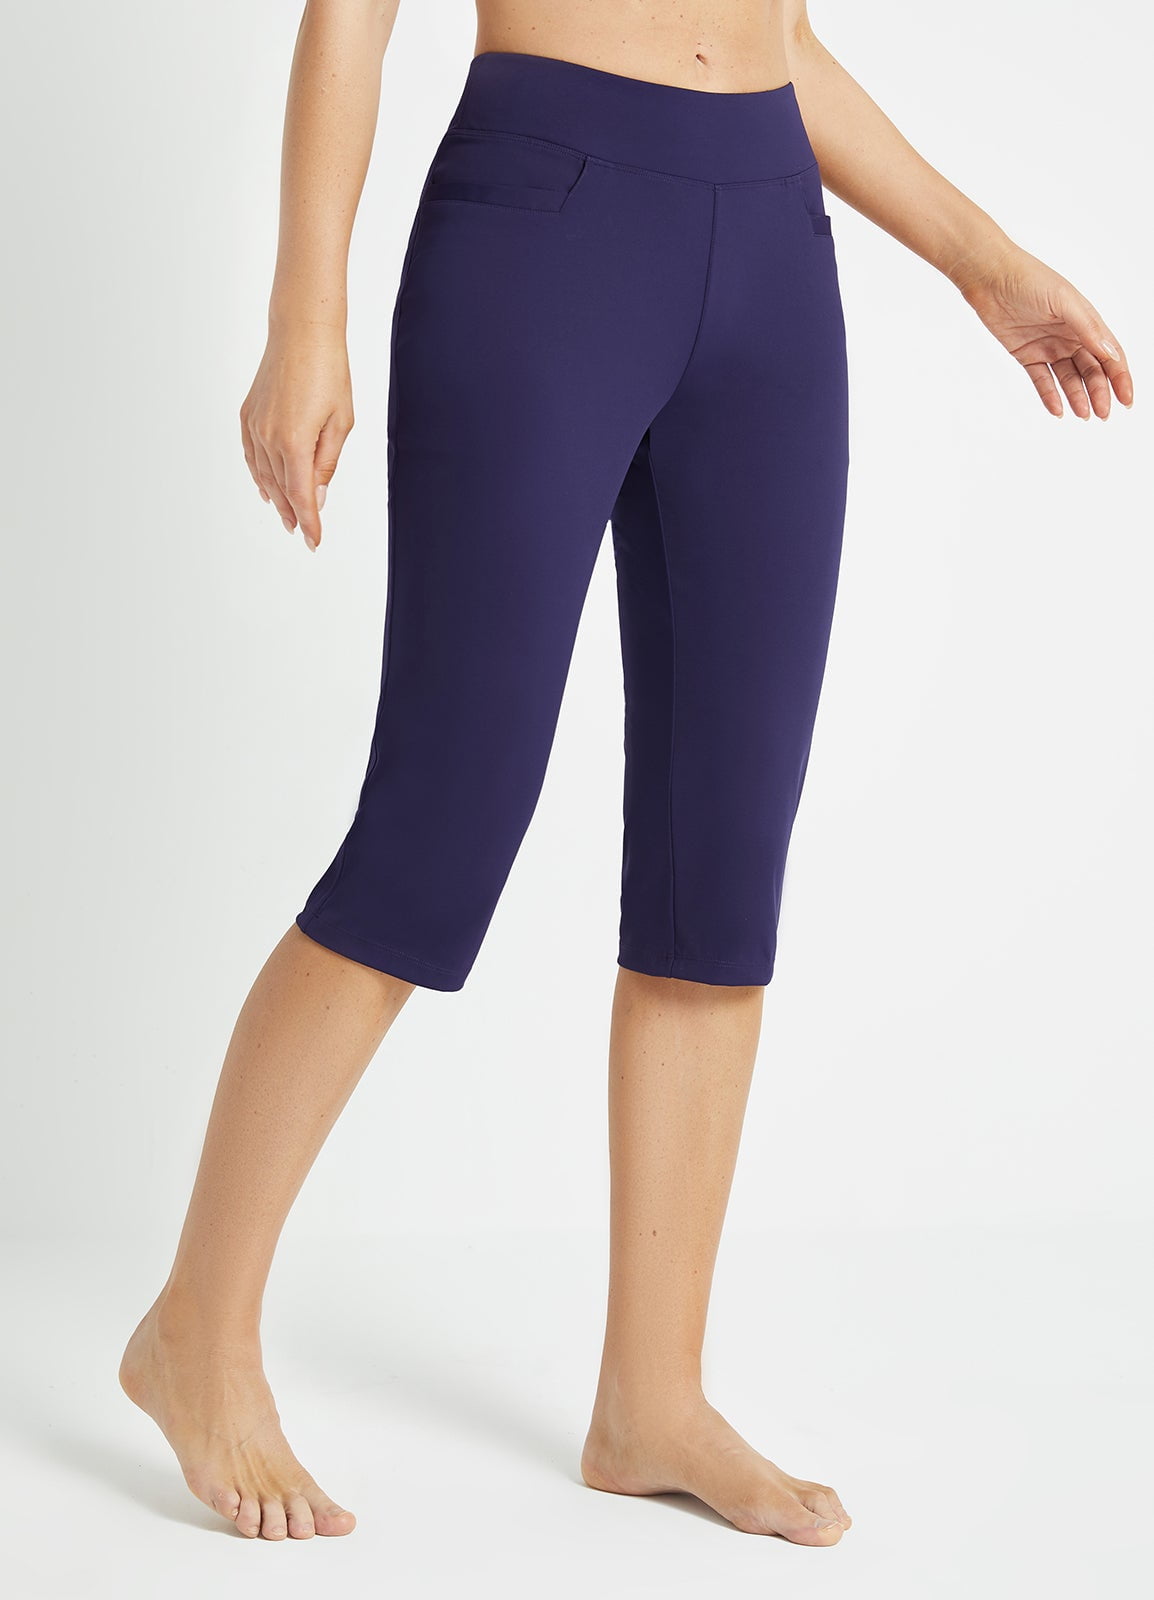 BALEAF Women's 17 Yoga Capri Pants Straight Wide Leg Petite Casual Capris  Workout Crop Pants with Pockets Navy XL 